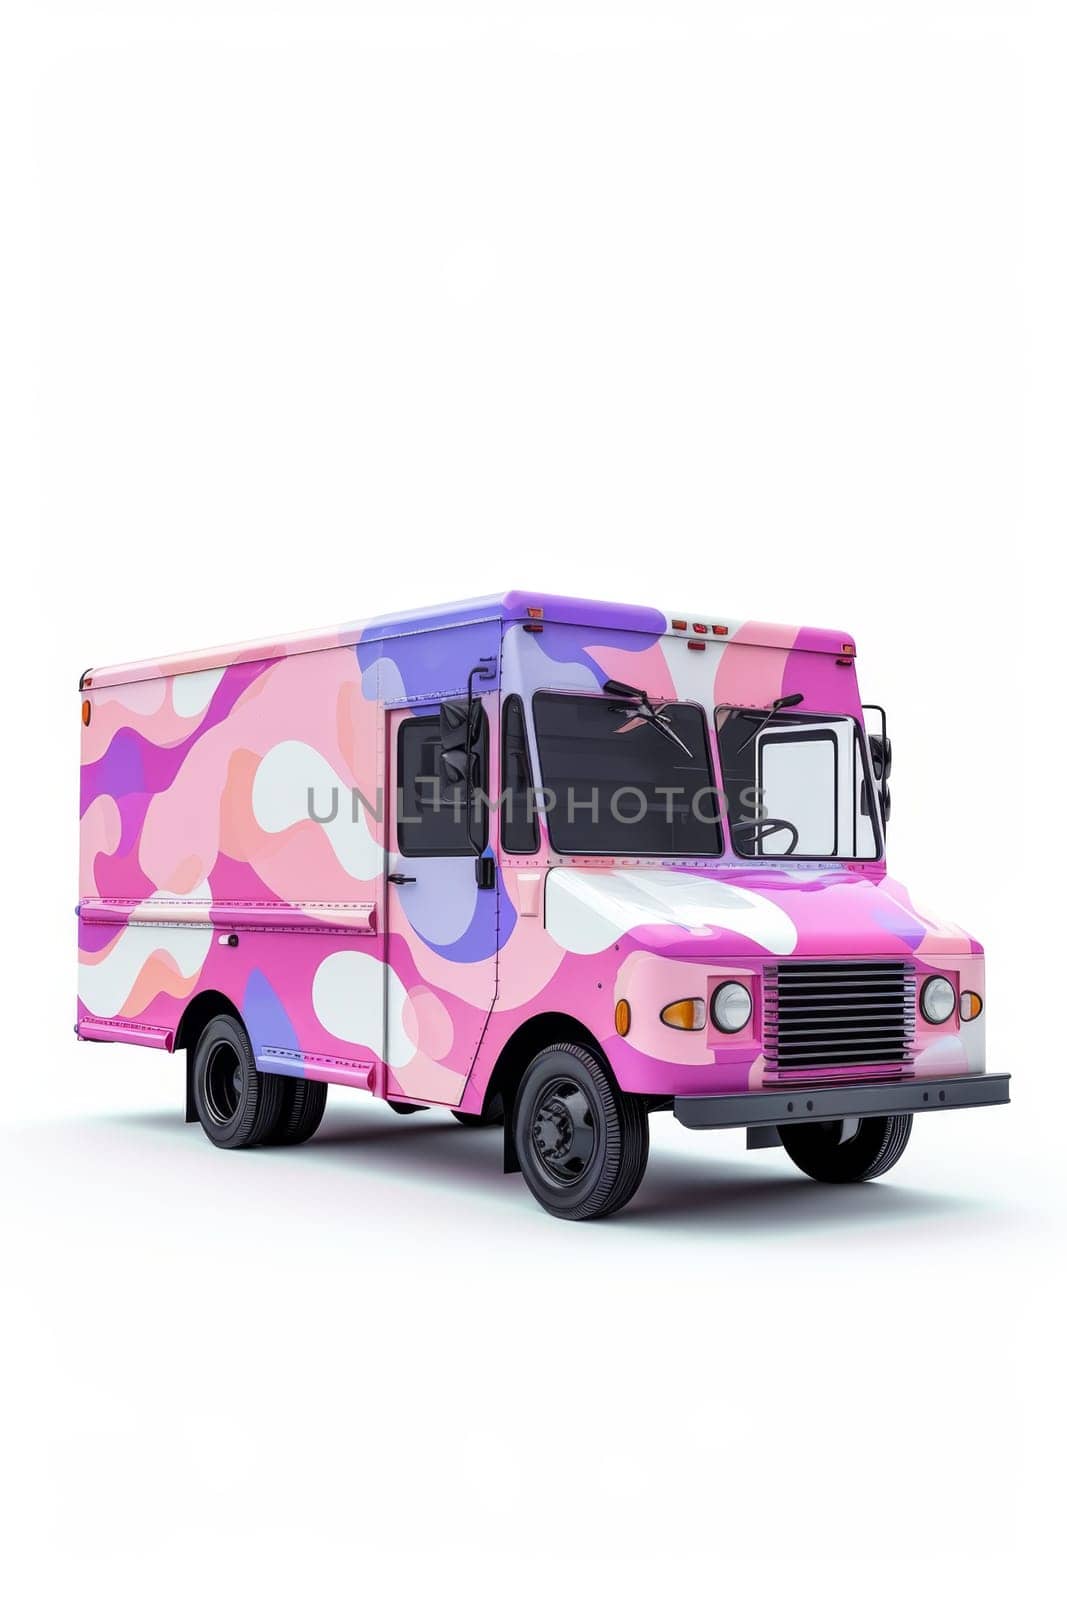 A modern pink van on a white background. 3D illustration.